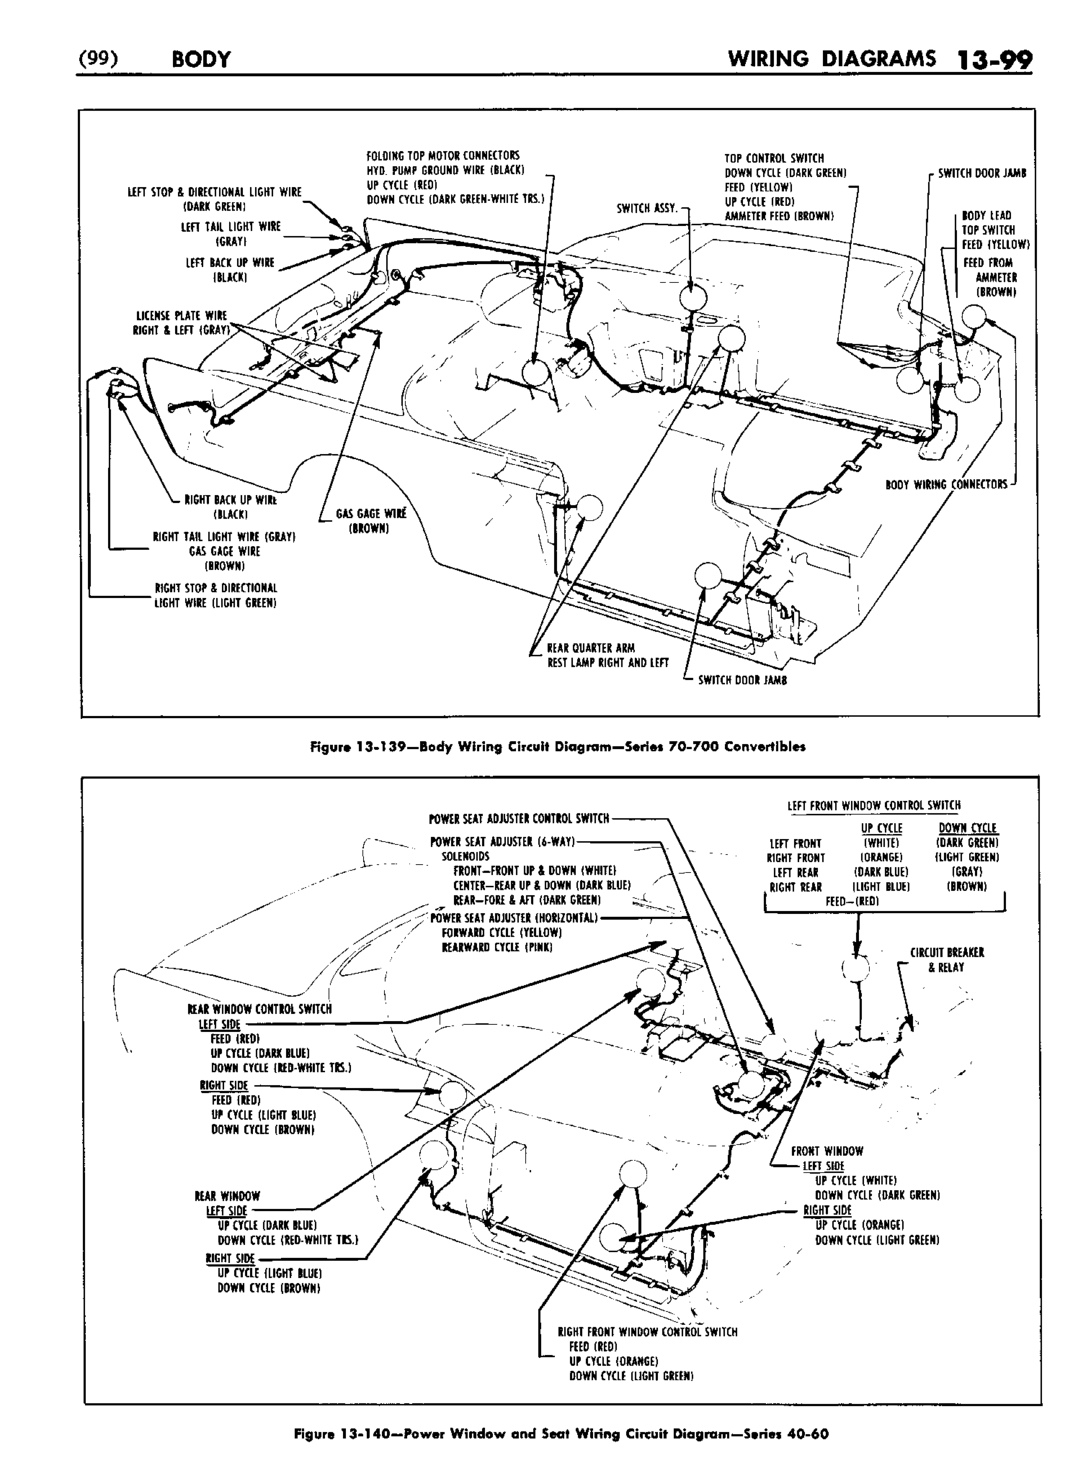 n_1958 Buick Body Service Manual-100-100.jpg